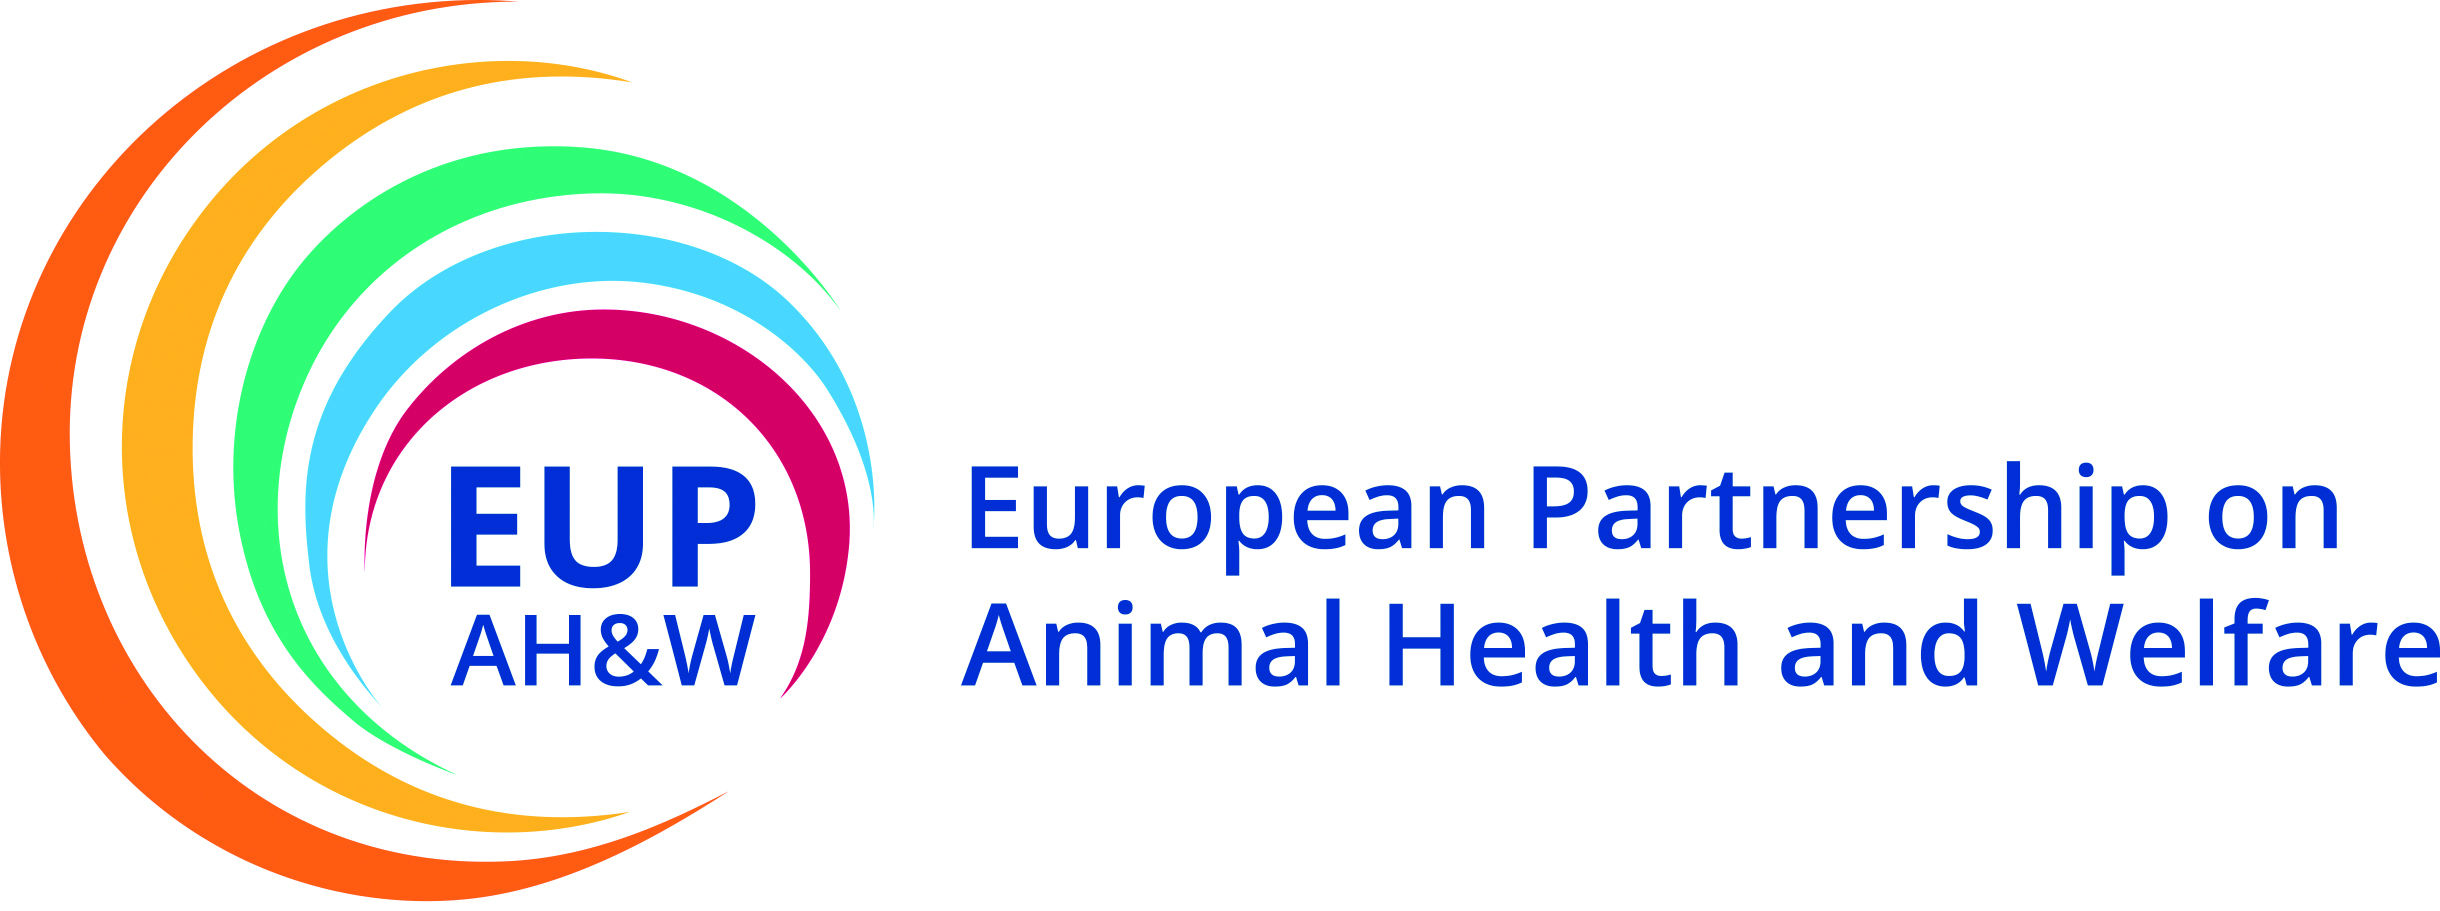 European partnership on animal health and welfare